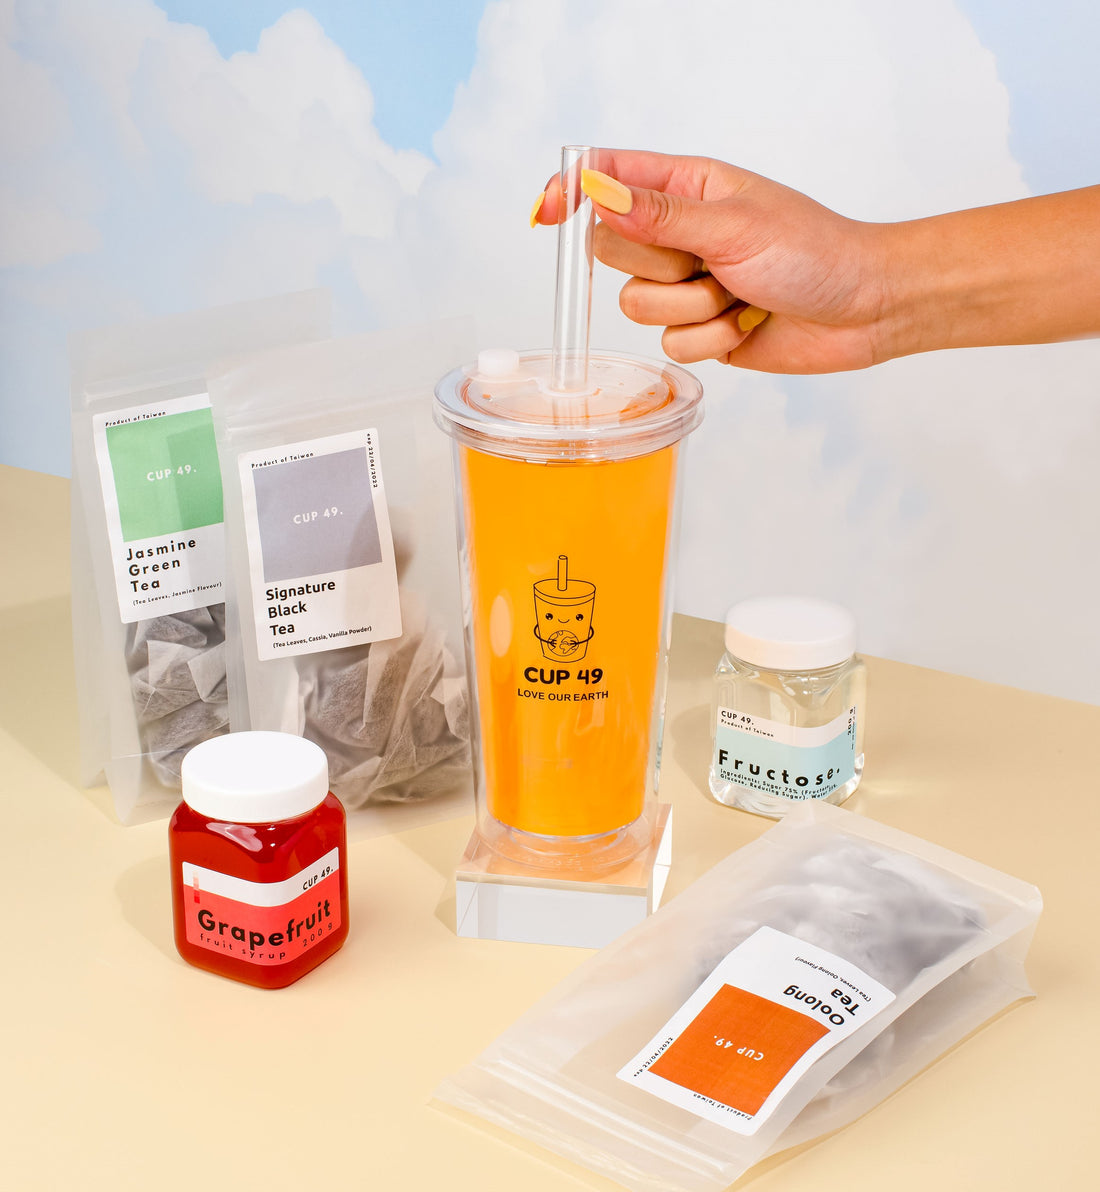 Cup 49 DIY grapefruit bubble tea kit